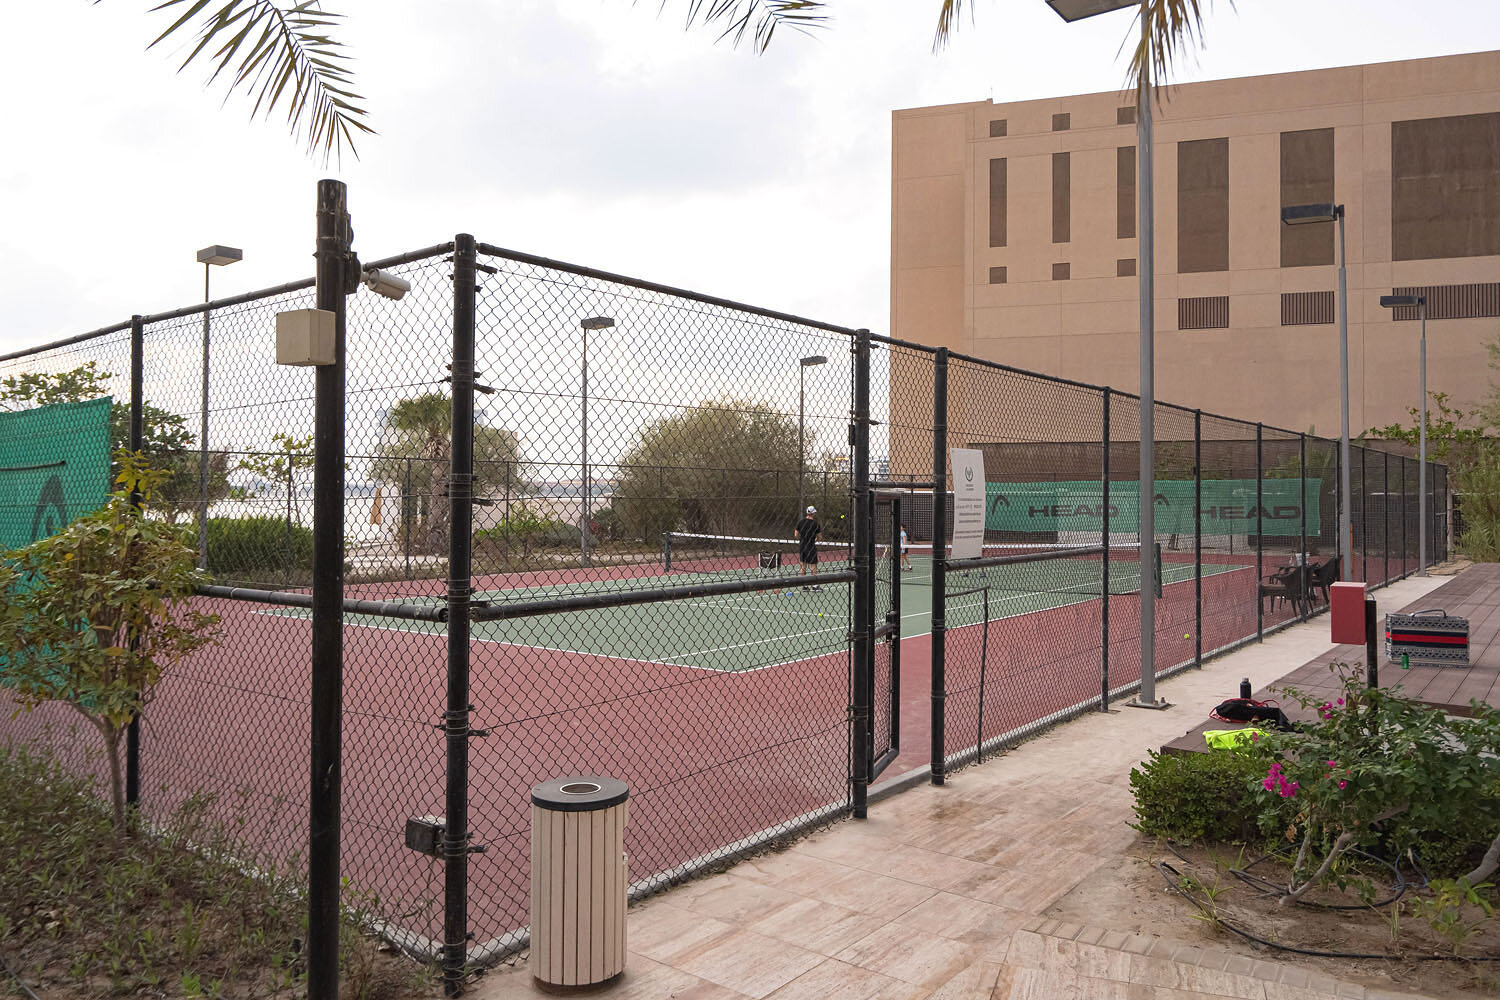  The tennis court 